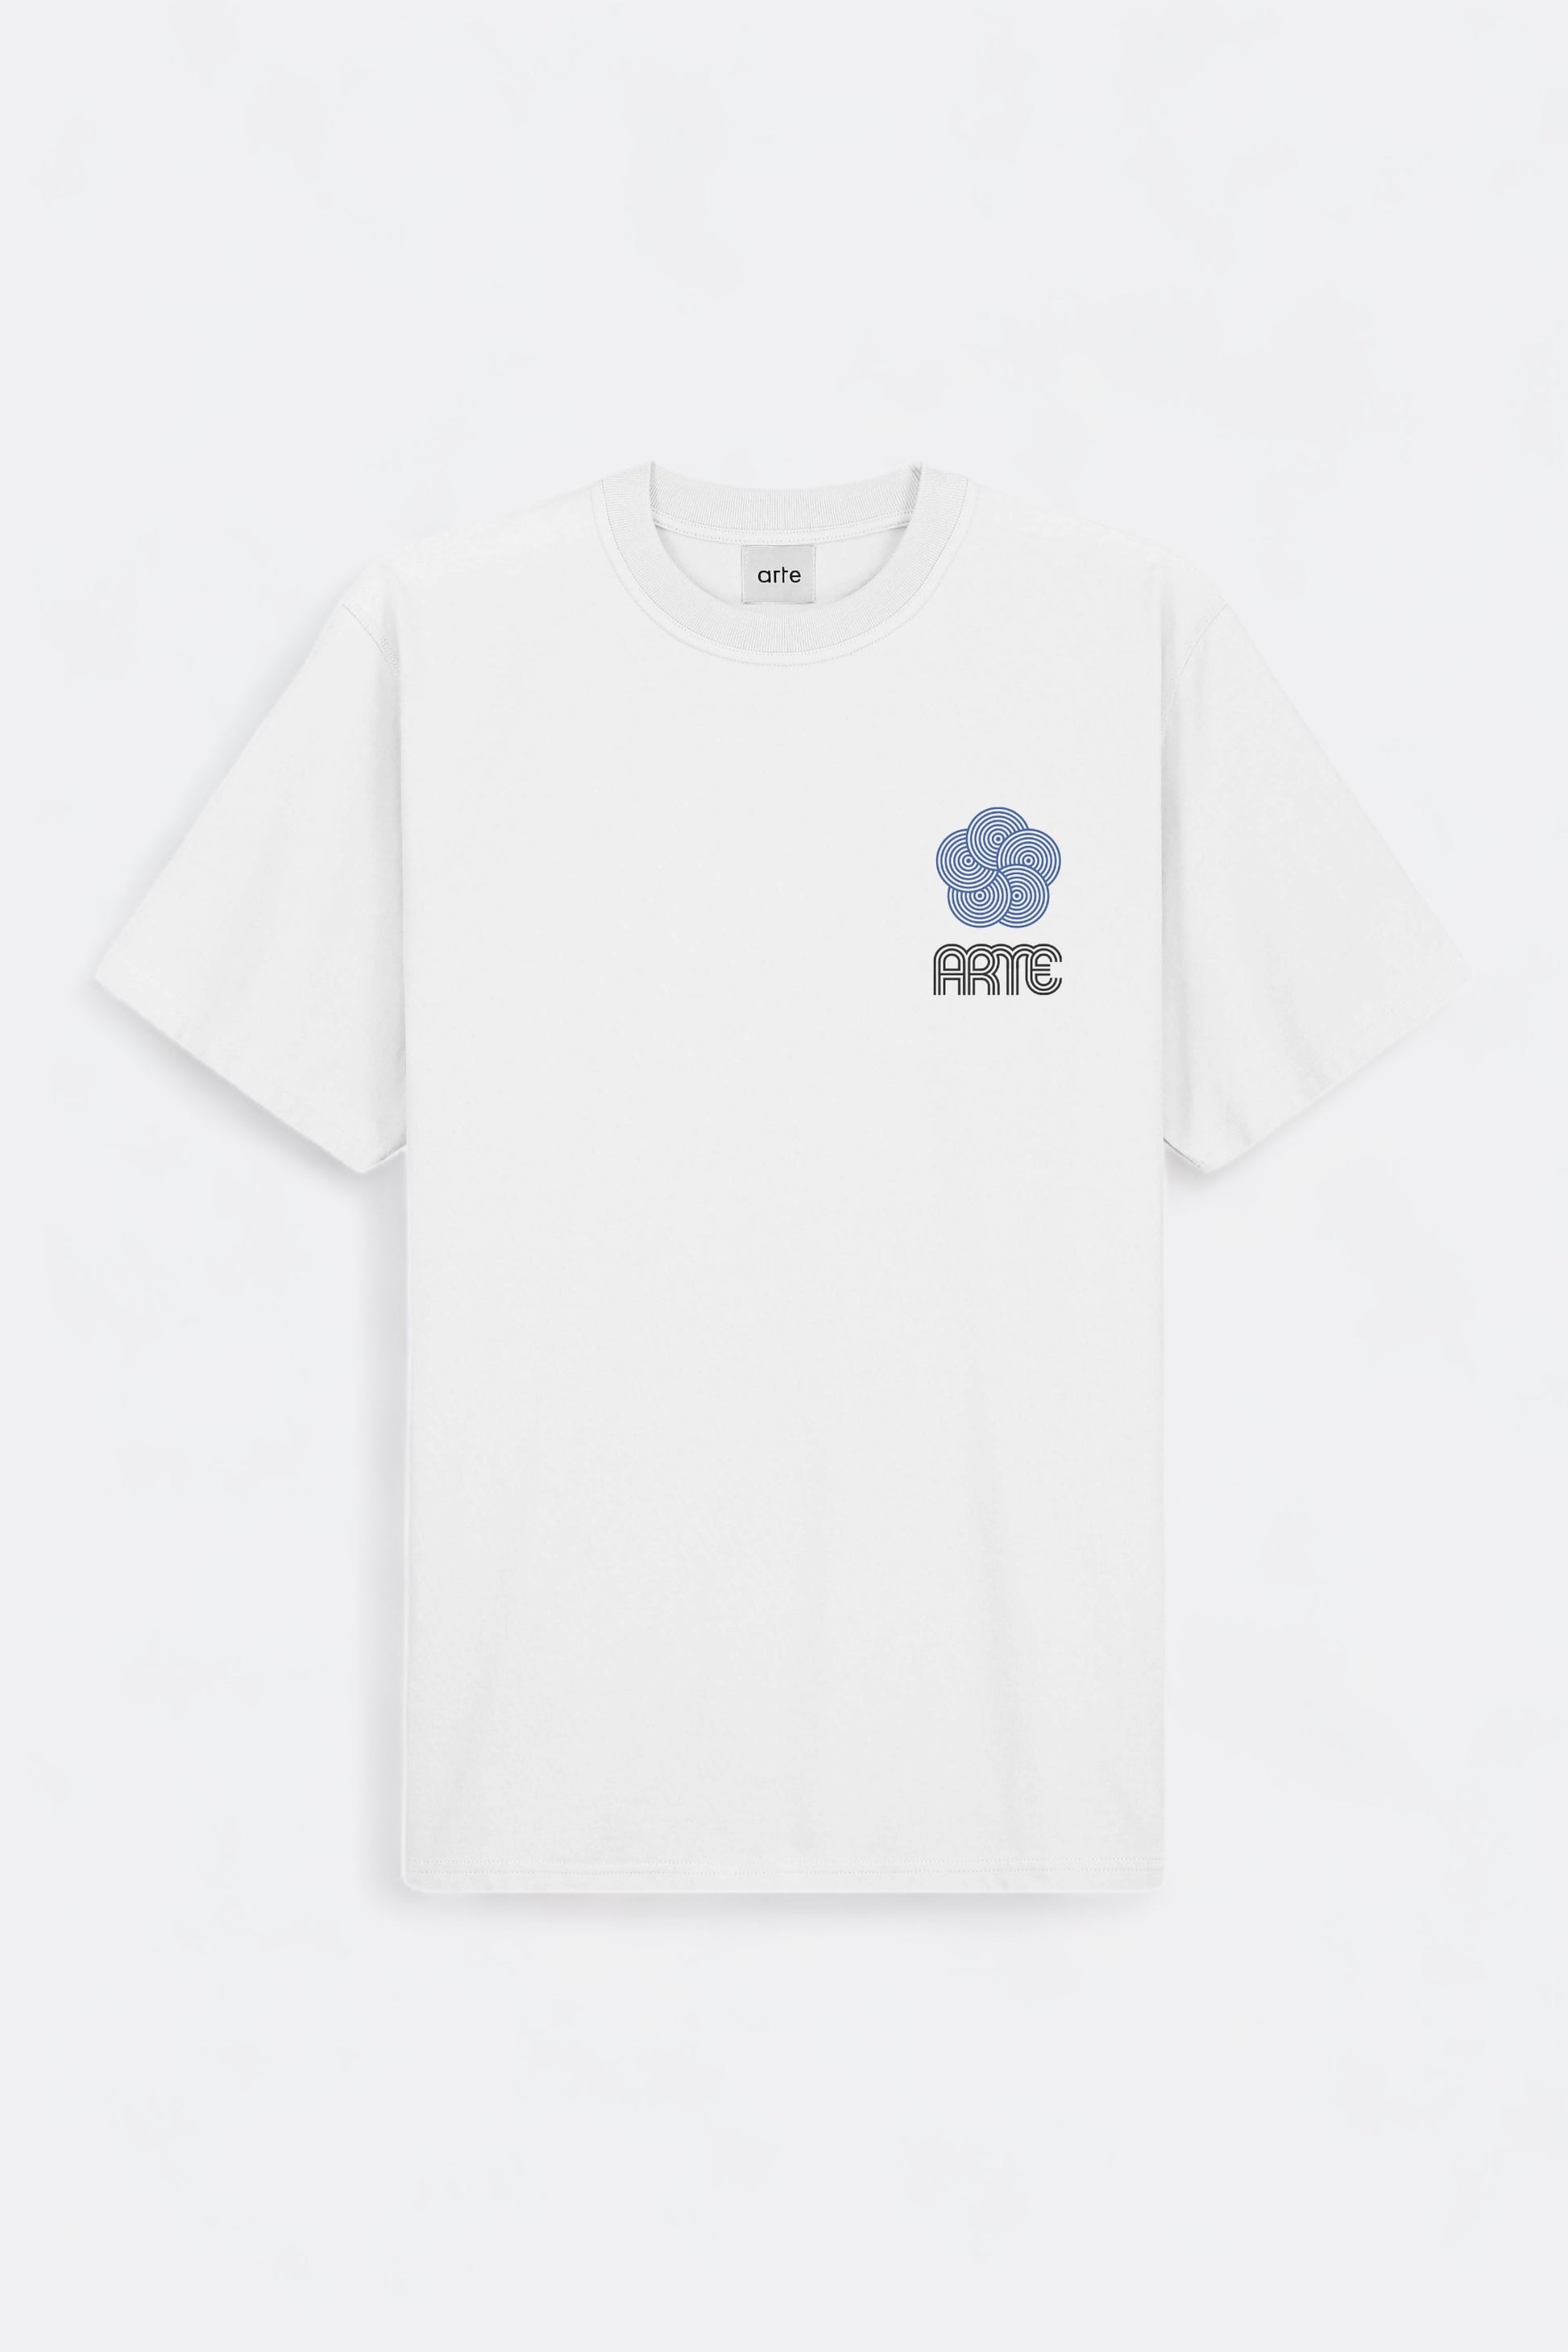 Arte - Teo Circle Flower T-shirt (White)